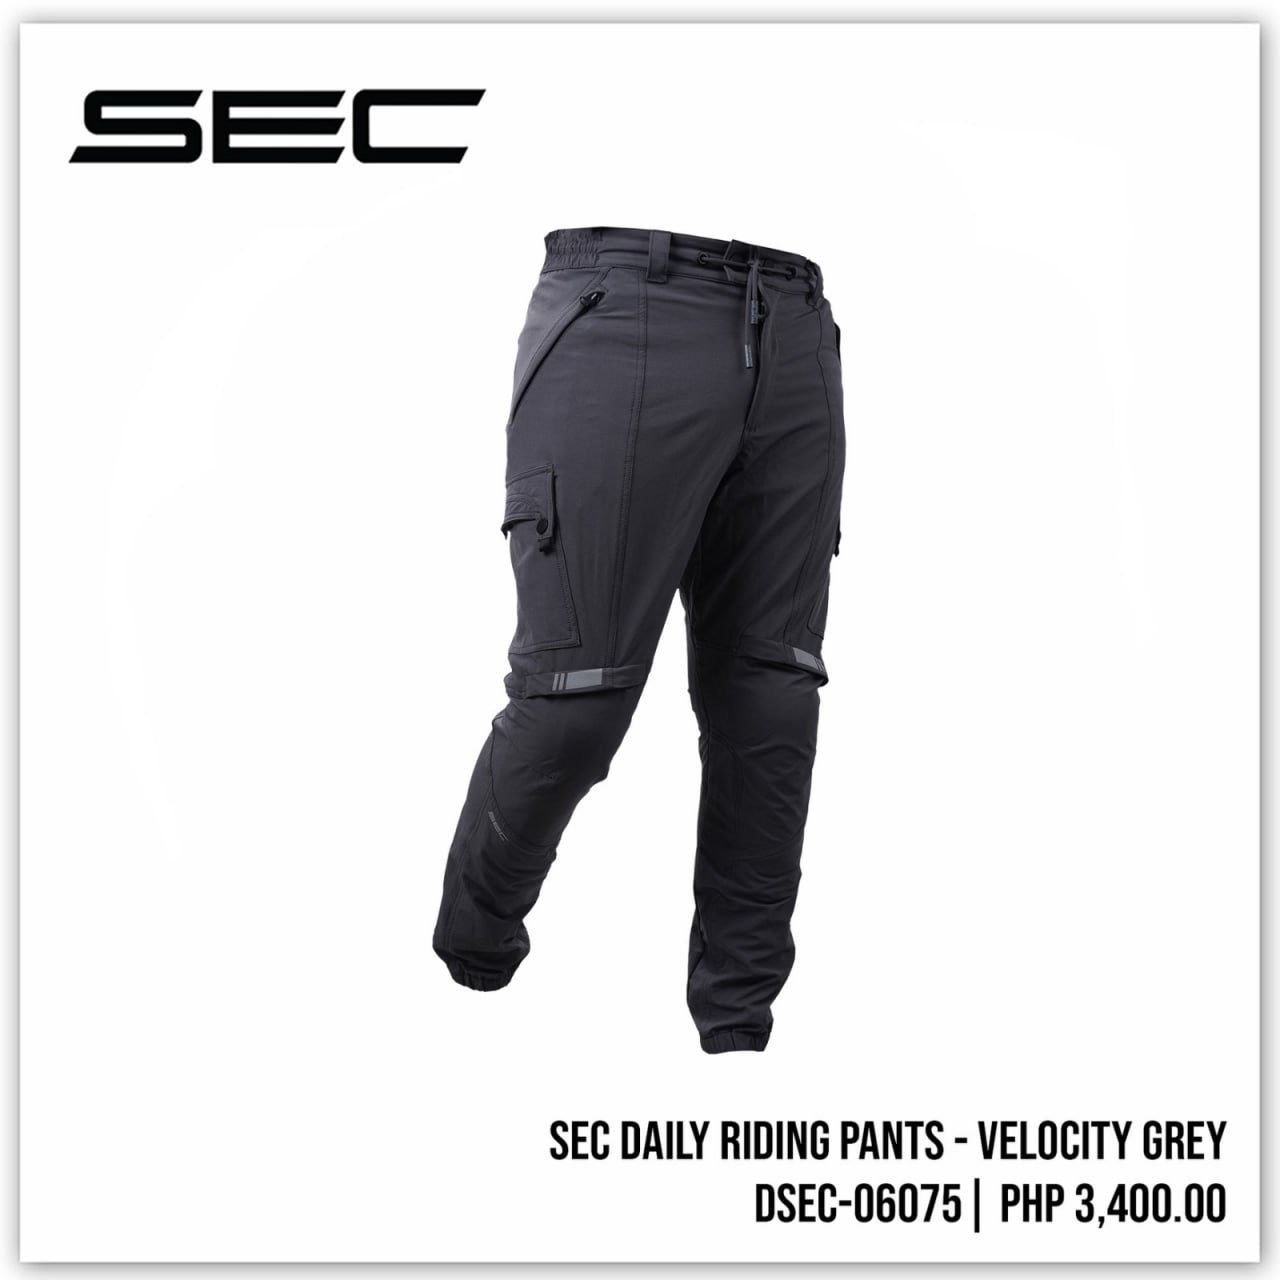 SEC - Daily Riding Pants - Velocity Grey Mens (M-4XL)